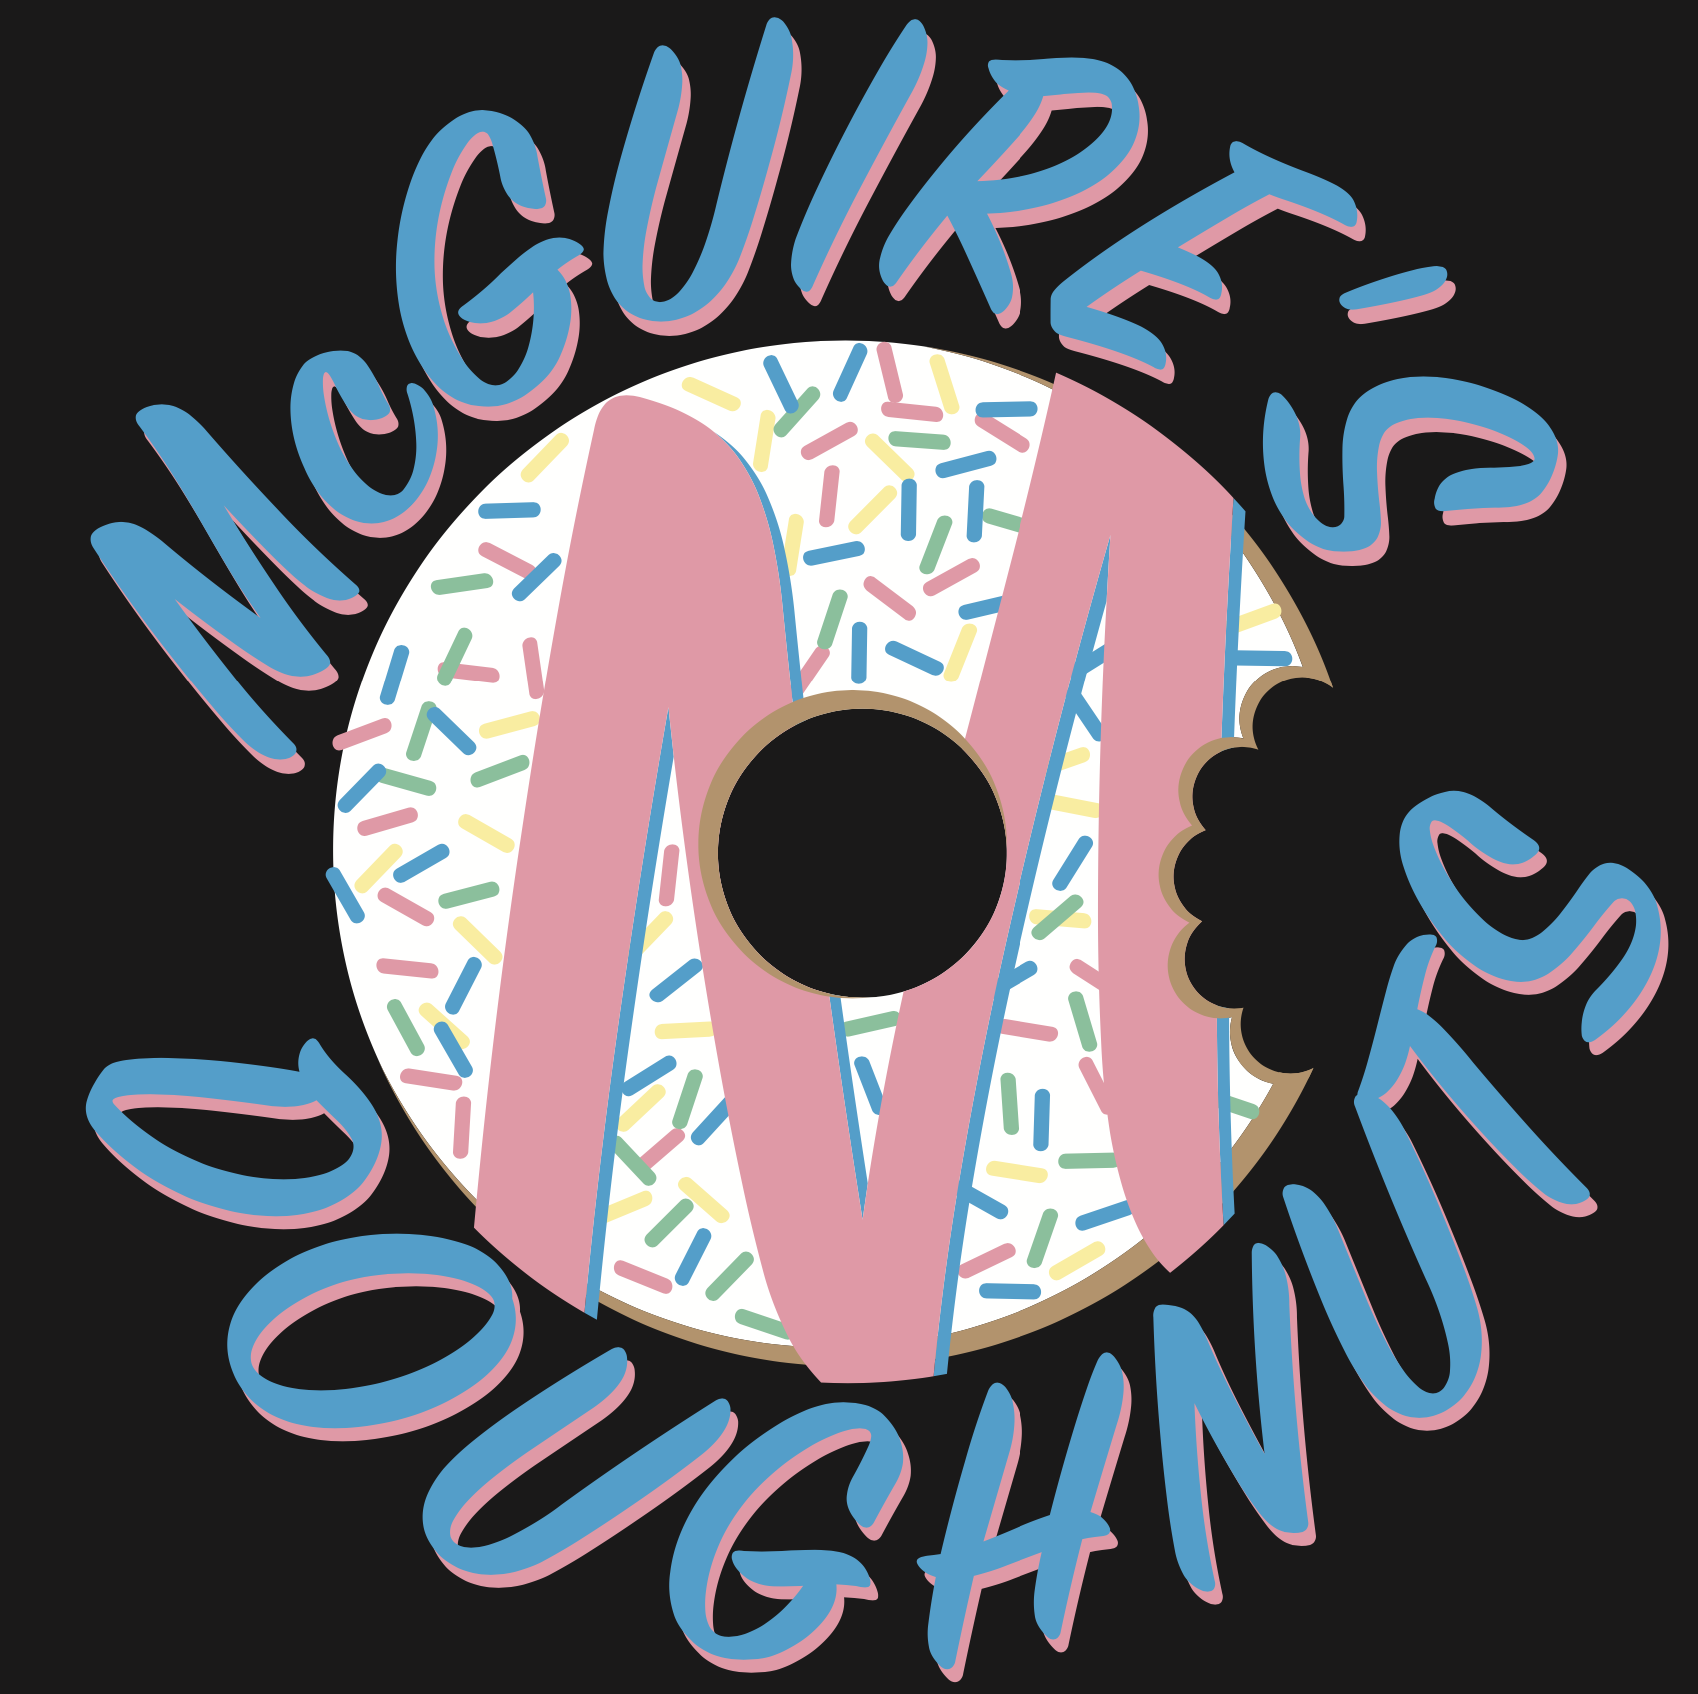 McGuire's Dougnuts